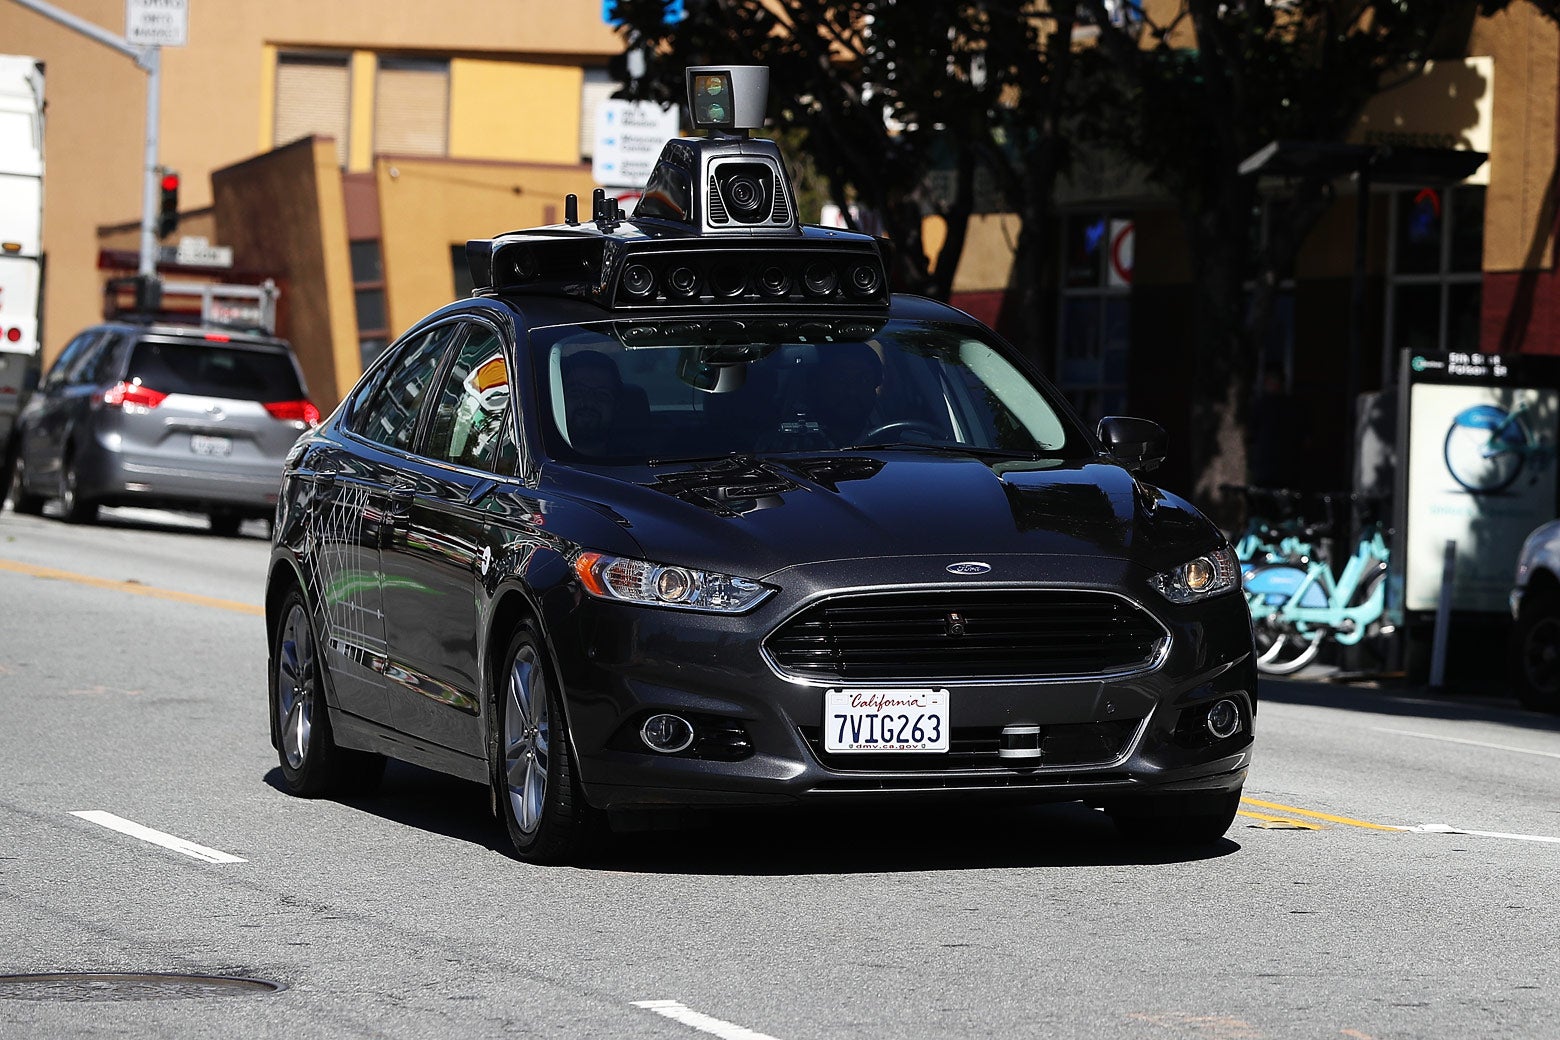 An Uber self-driving car drives down the street.